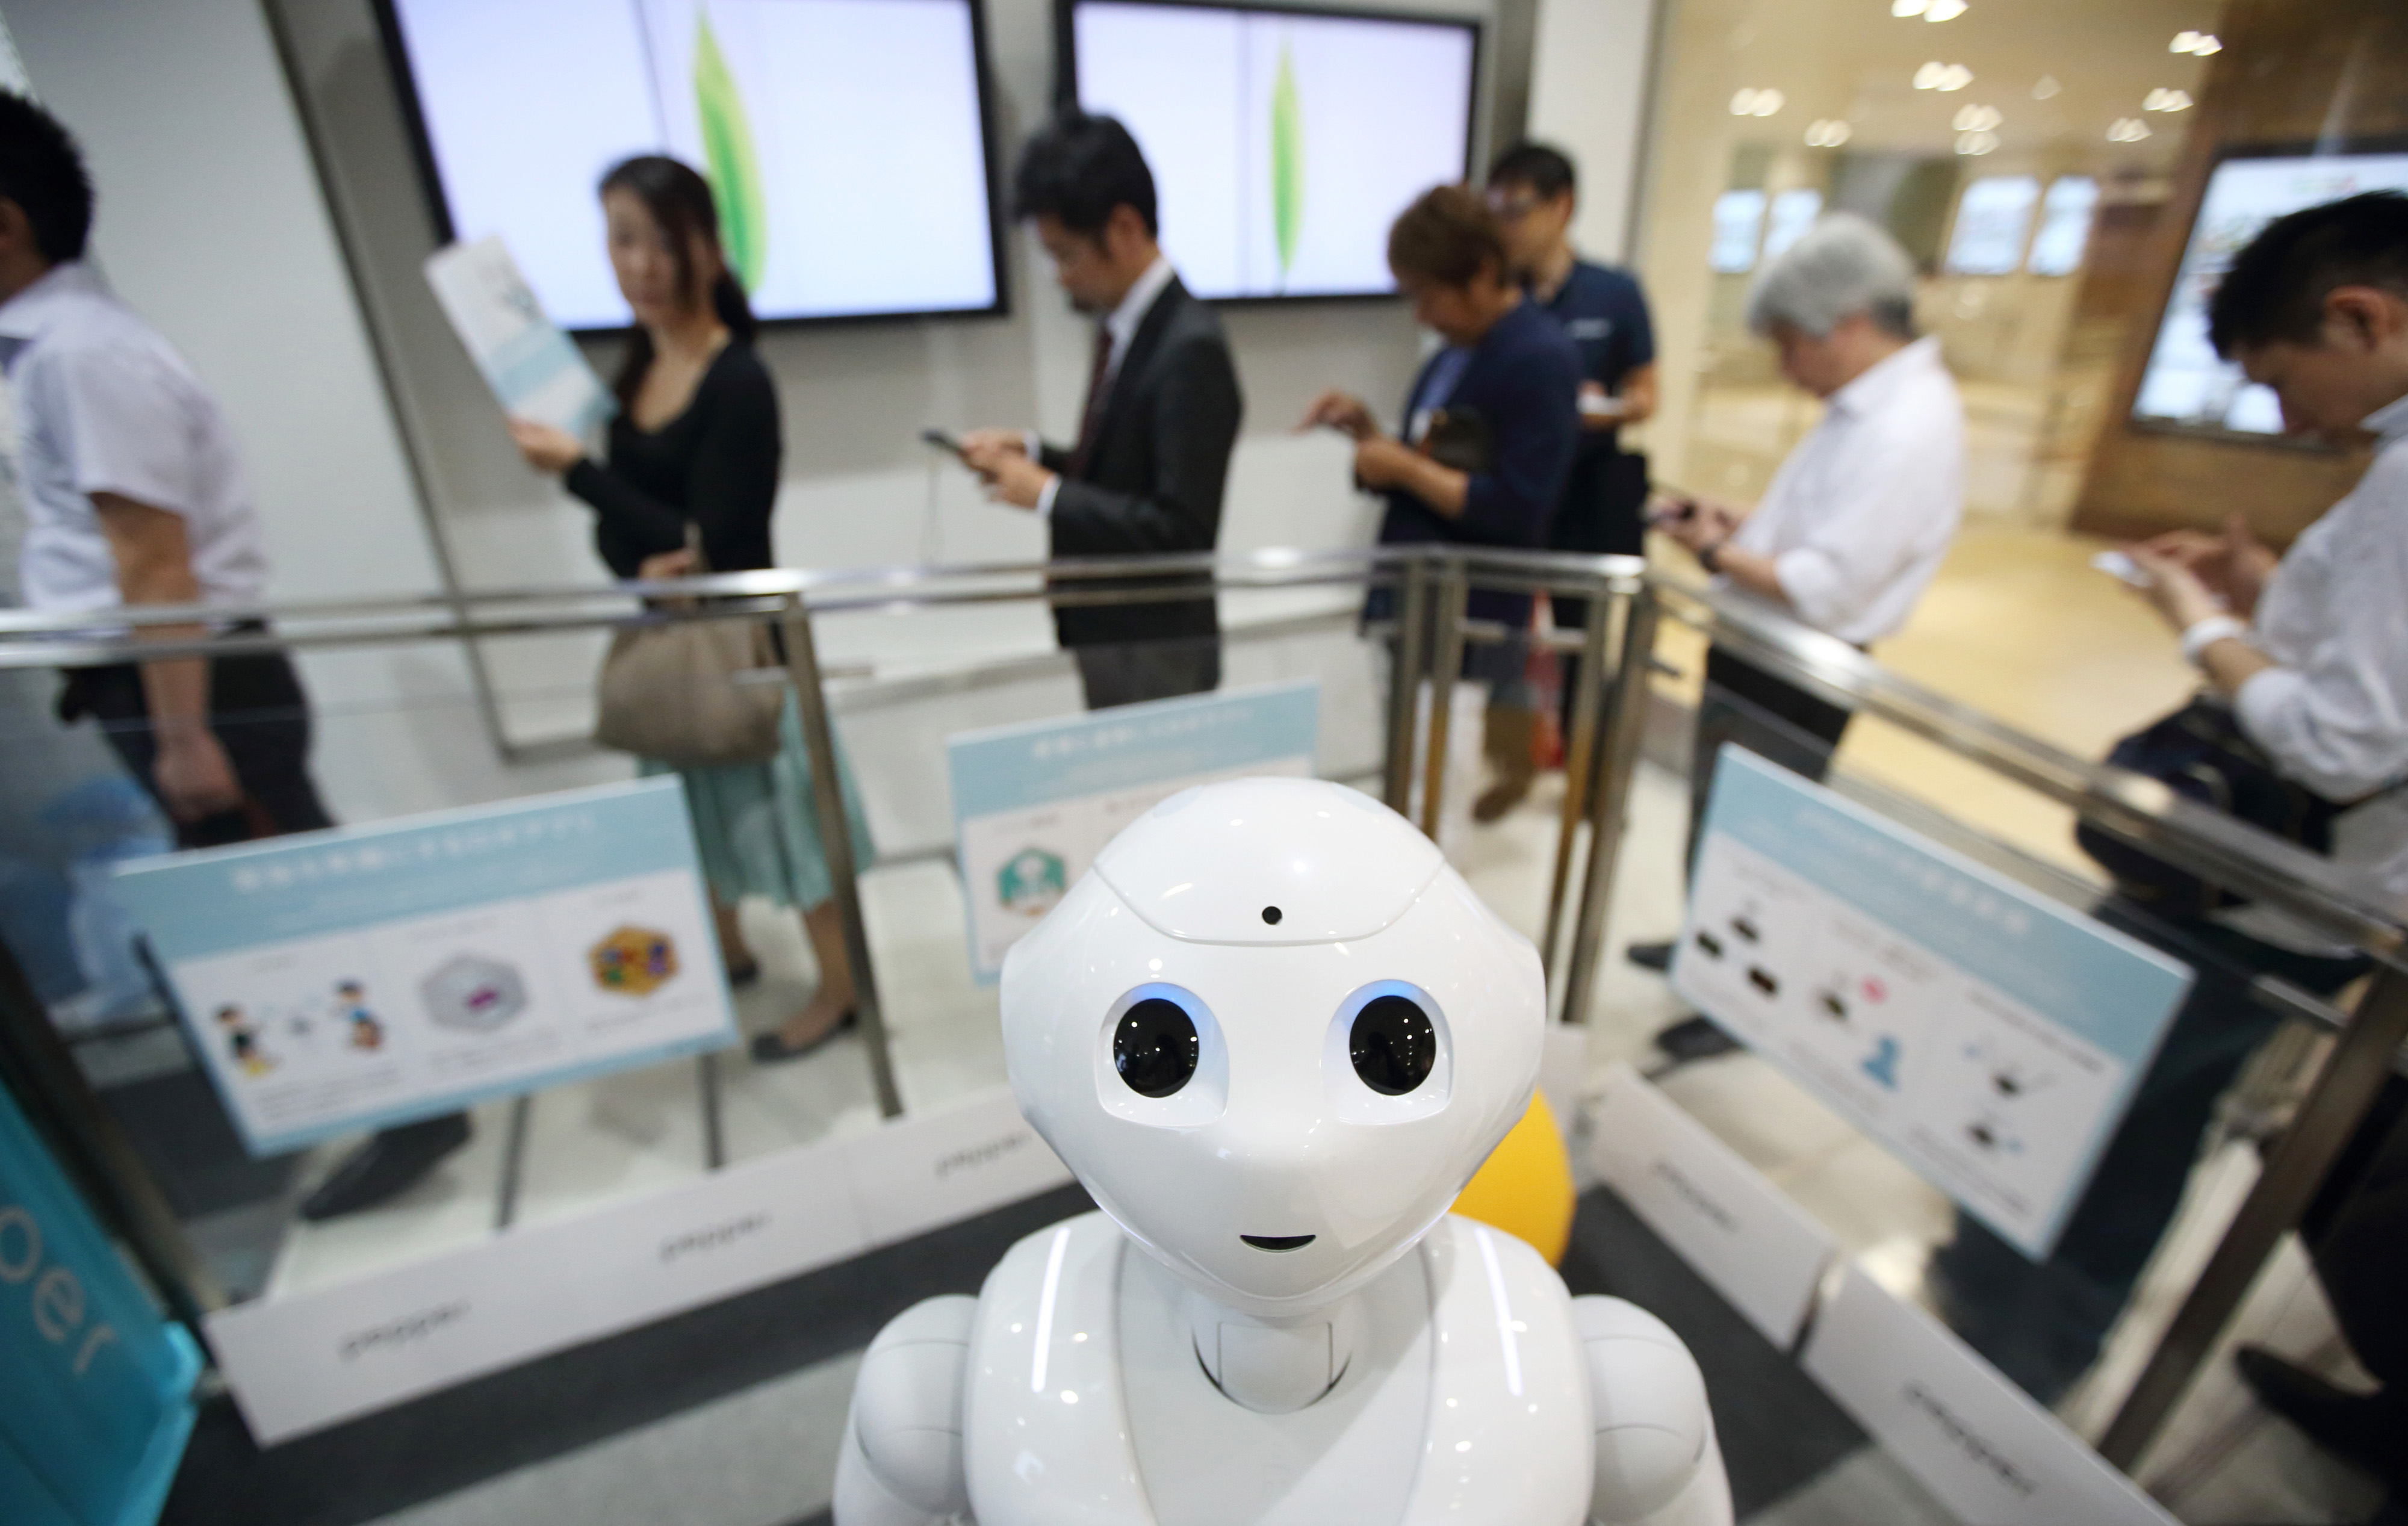 Pepper robot gets new job selling insurance - Democratic ...